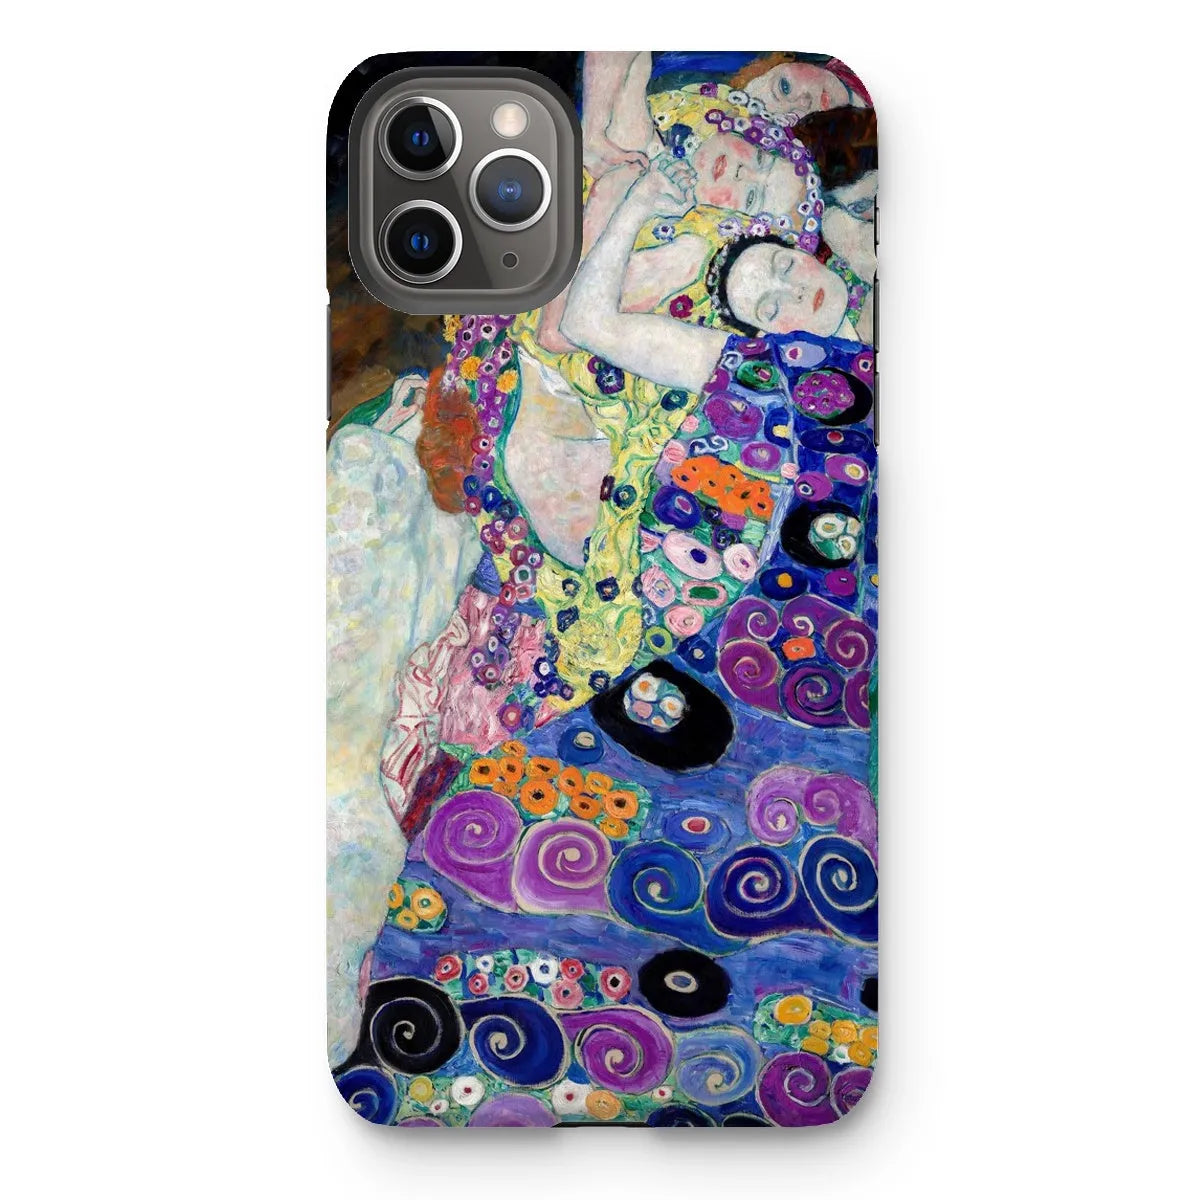 The Virgin - Vienna Secession Phone Case - Gustav Klimt - Iphone 11 Pro Max / Matte - Mobile Phone Cases - Aesthetic Art